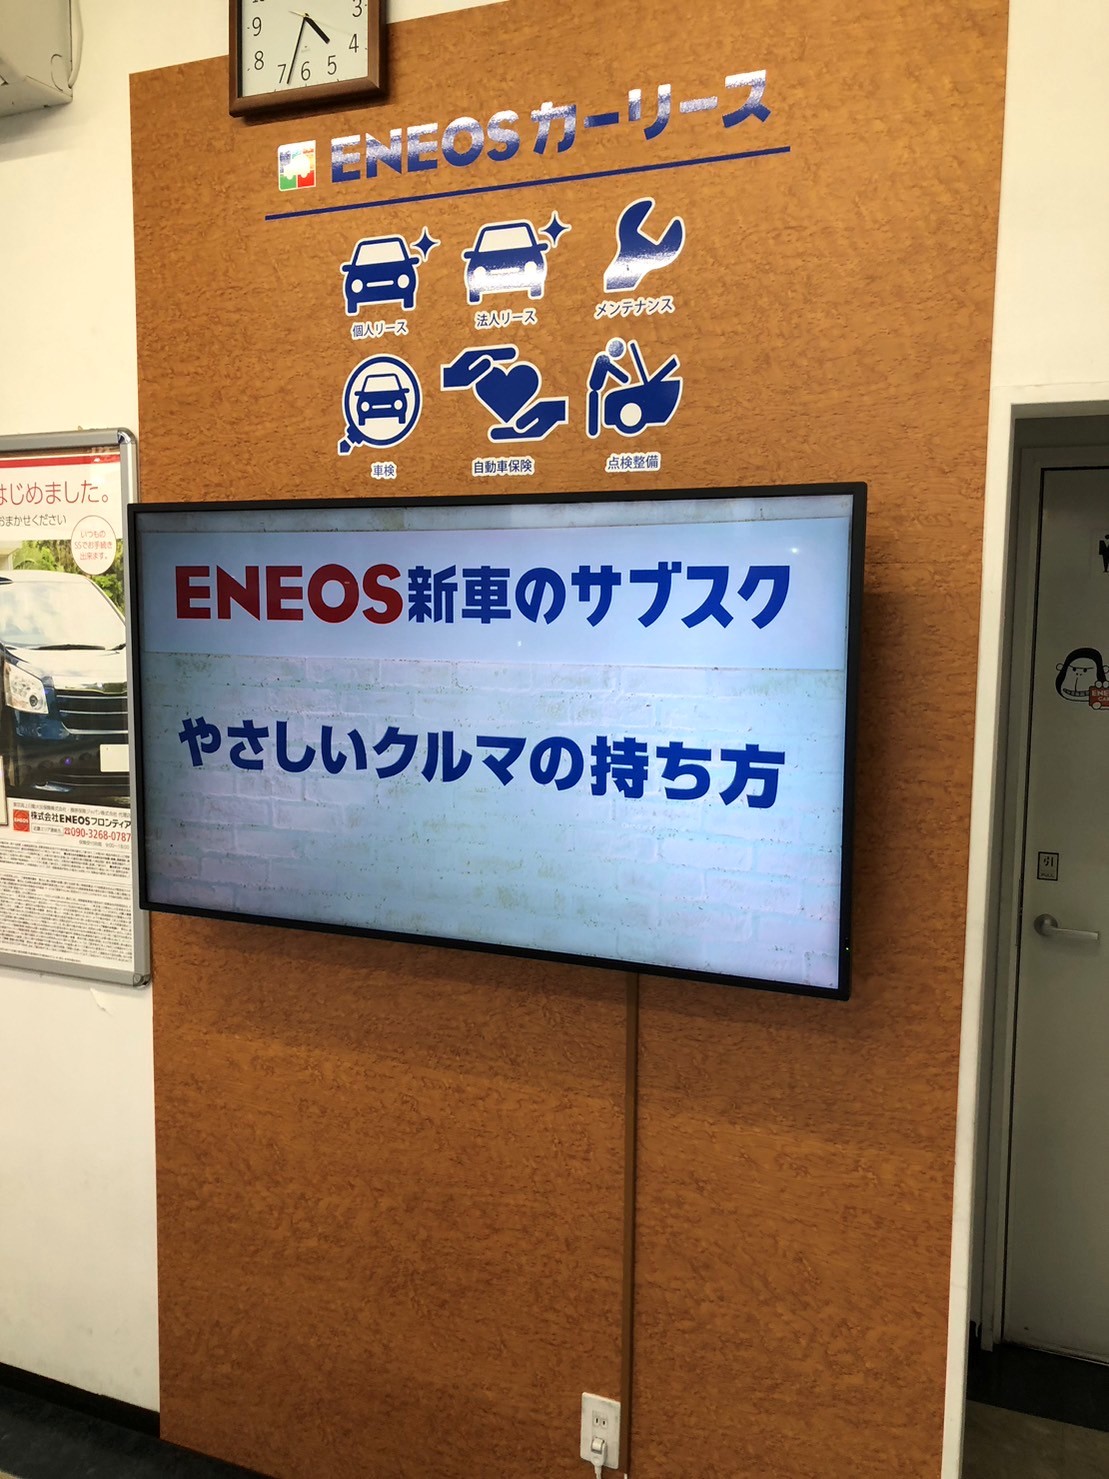 Images ENEOS Dr.Driveセルフ守山中央店(ENEOSフロンティア)